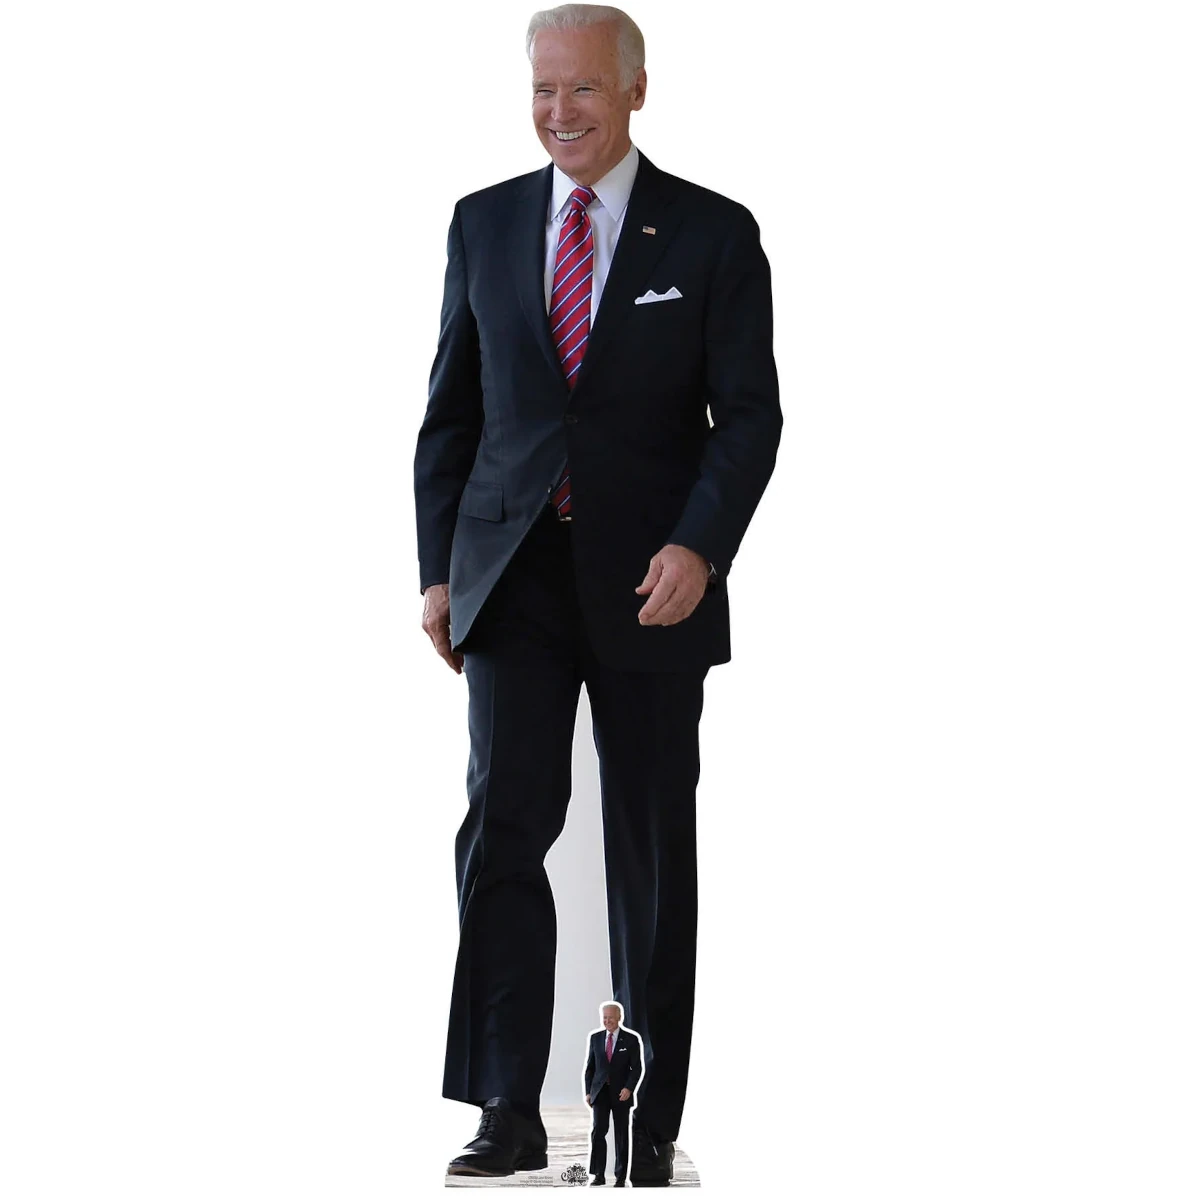 CS835 Joe Biden 'Walking' (U.S. President) Lifesize + Mini Cardboard Cutout Standee